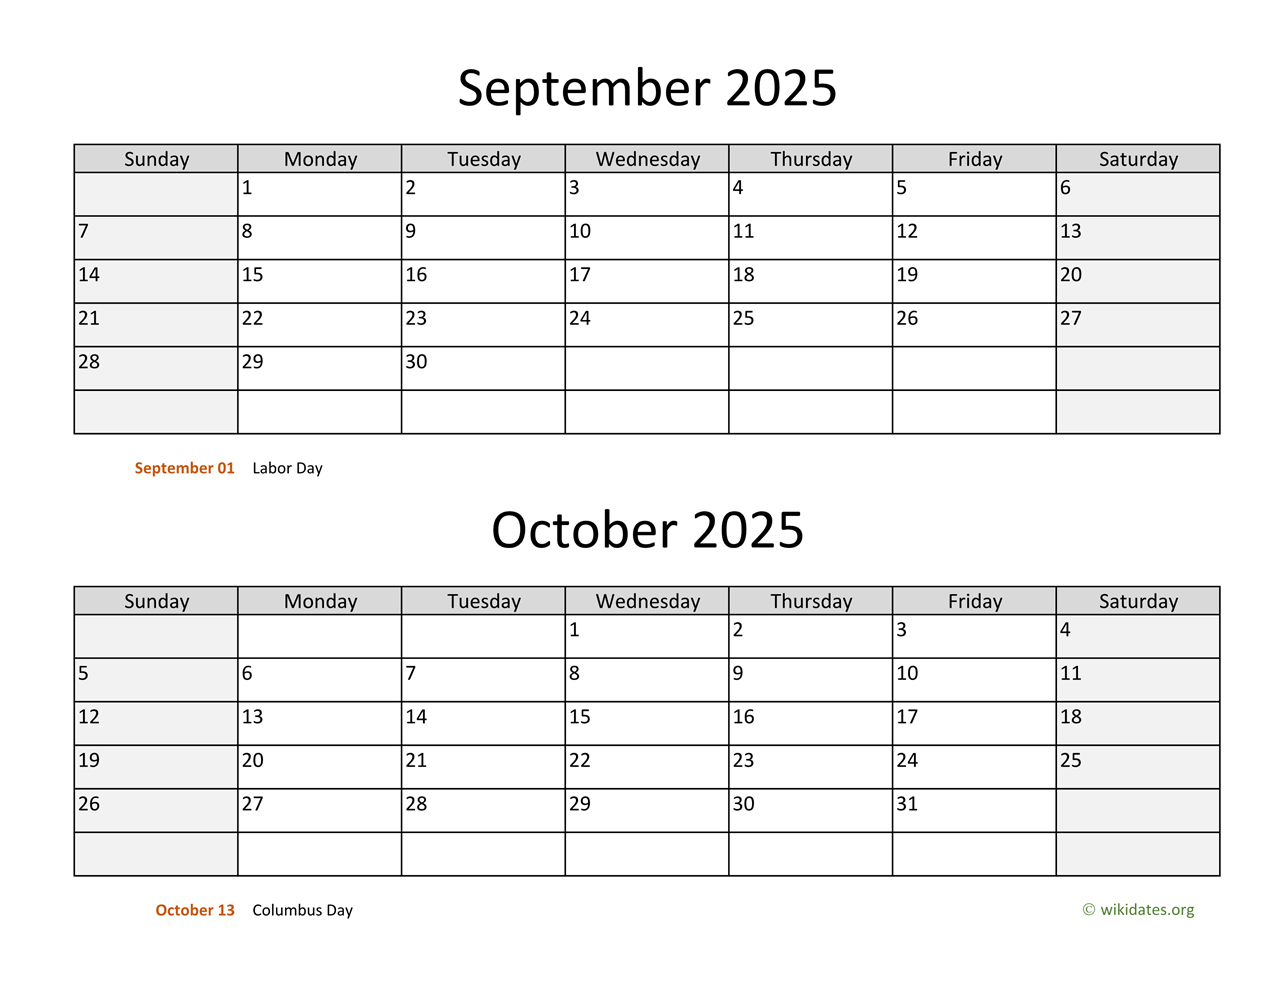 October 2025 Calendar Landscape 